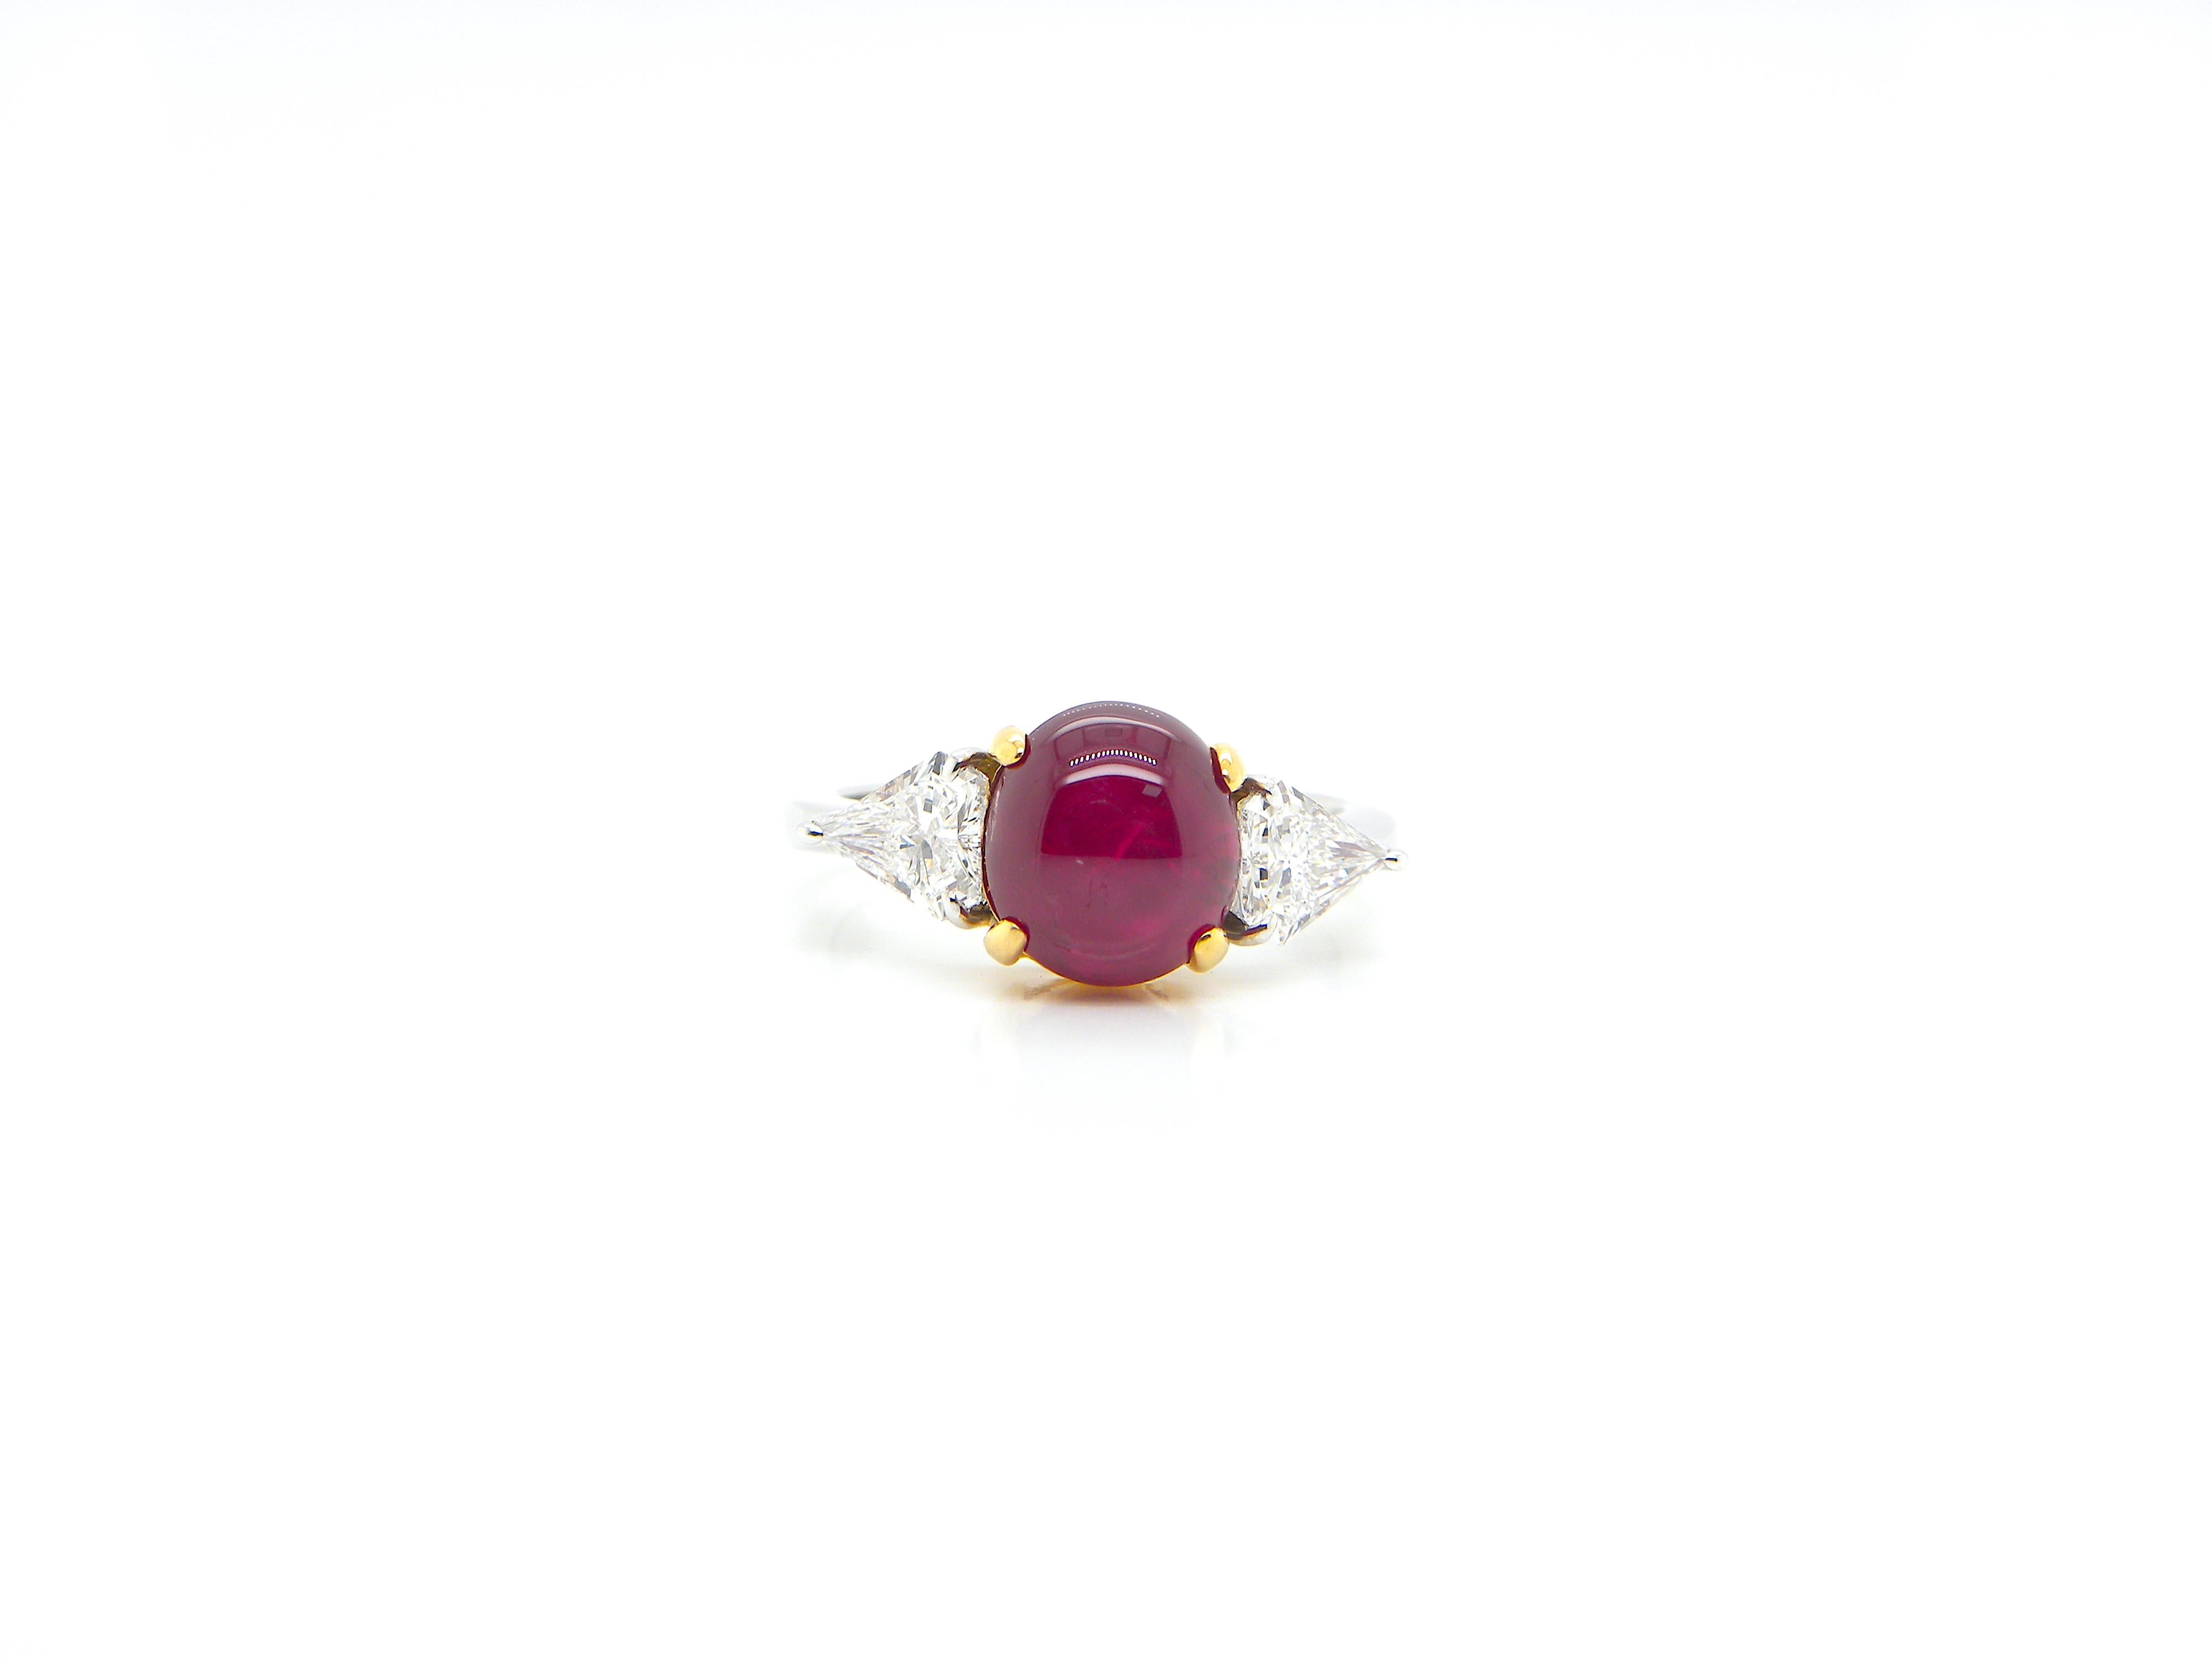 4.52 Carat GIA Certified Burma No Heat Vivid Red Star Ruby and Diamond Gold Ring:

A beautiful and rare jewel, it features a 4.52 carat GIA certified Burma 